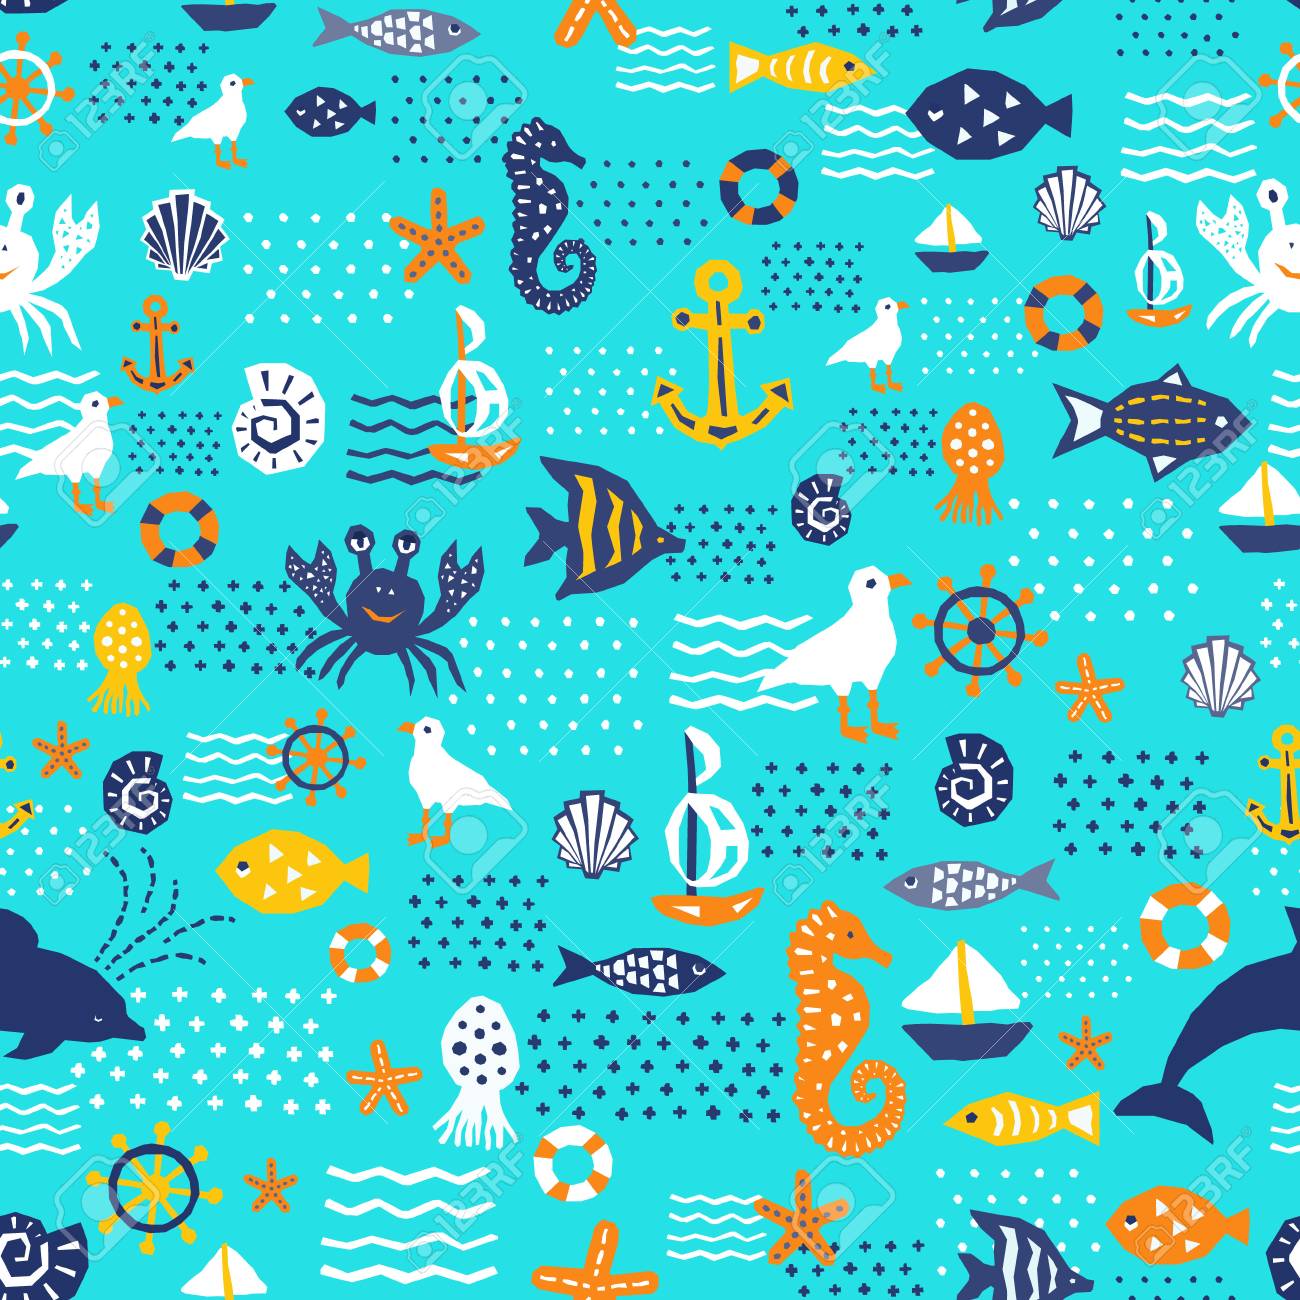 Seaworld Design Pattern Textile Childish Wallpaper Wrapping